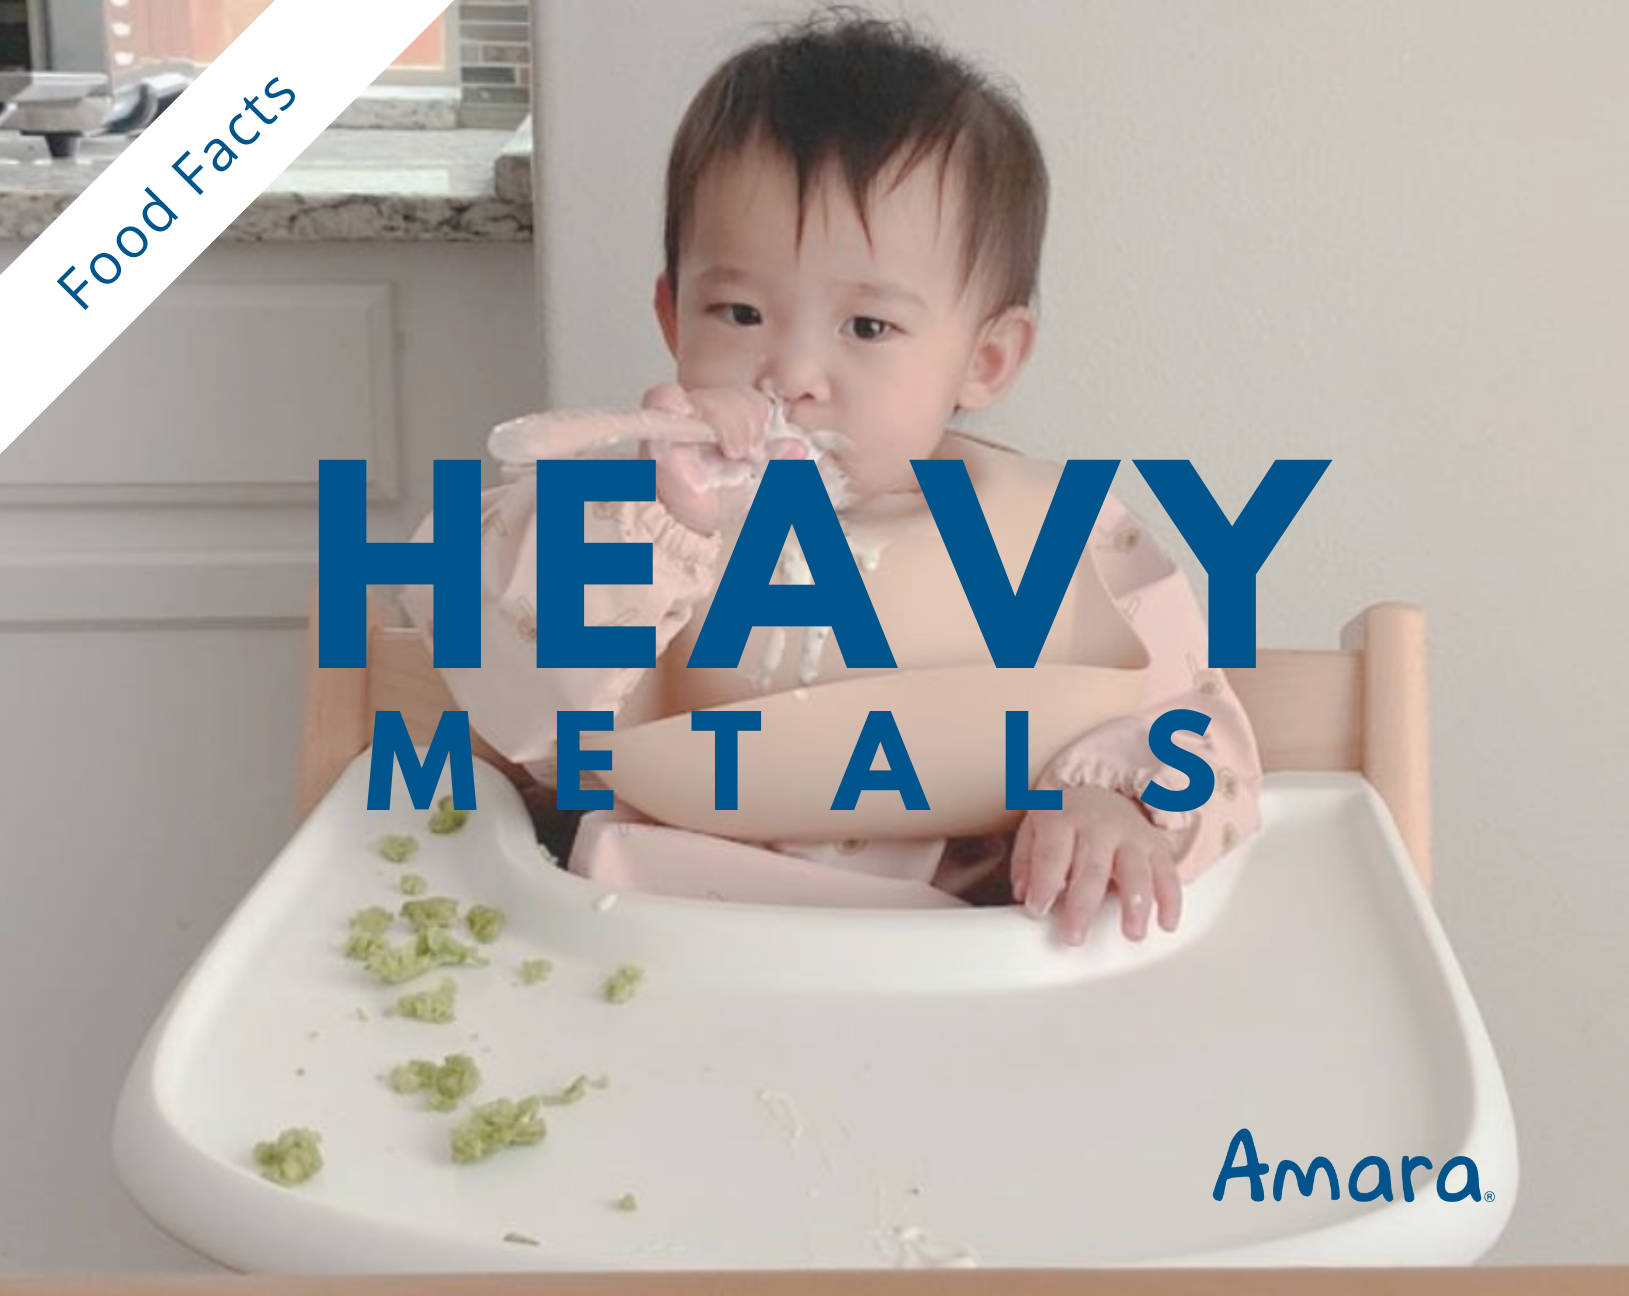 avoid heavy metals in my baby's food